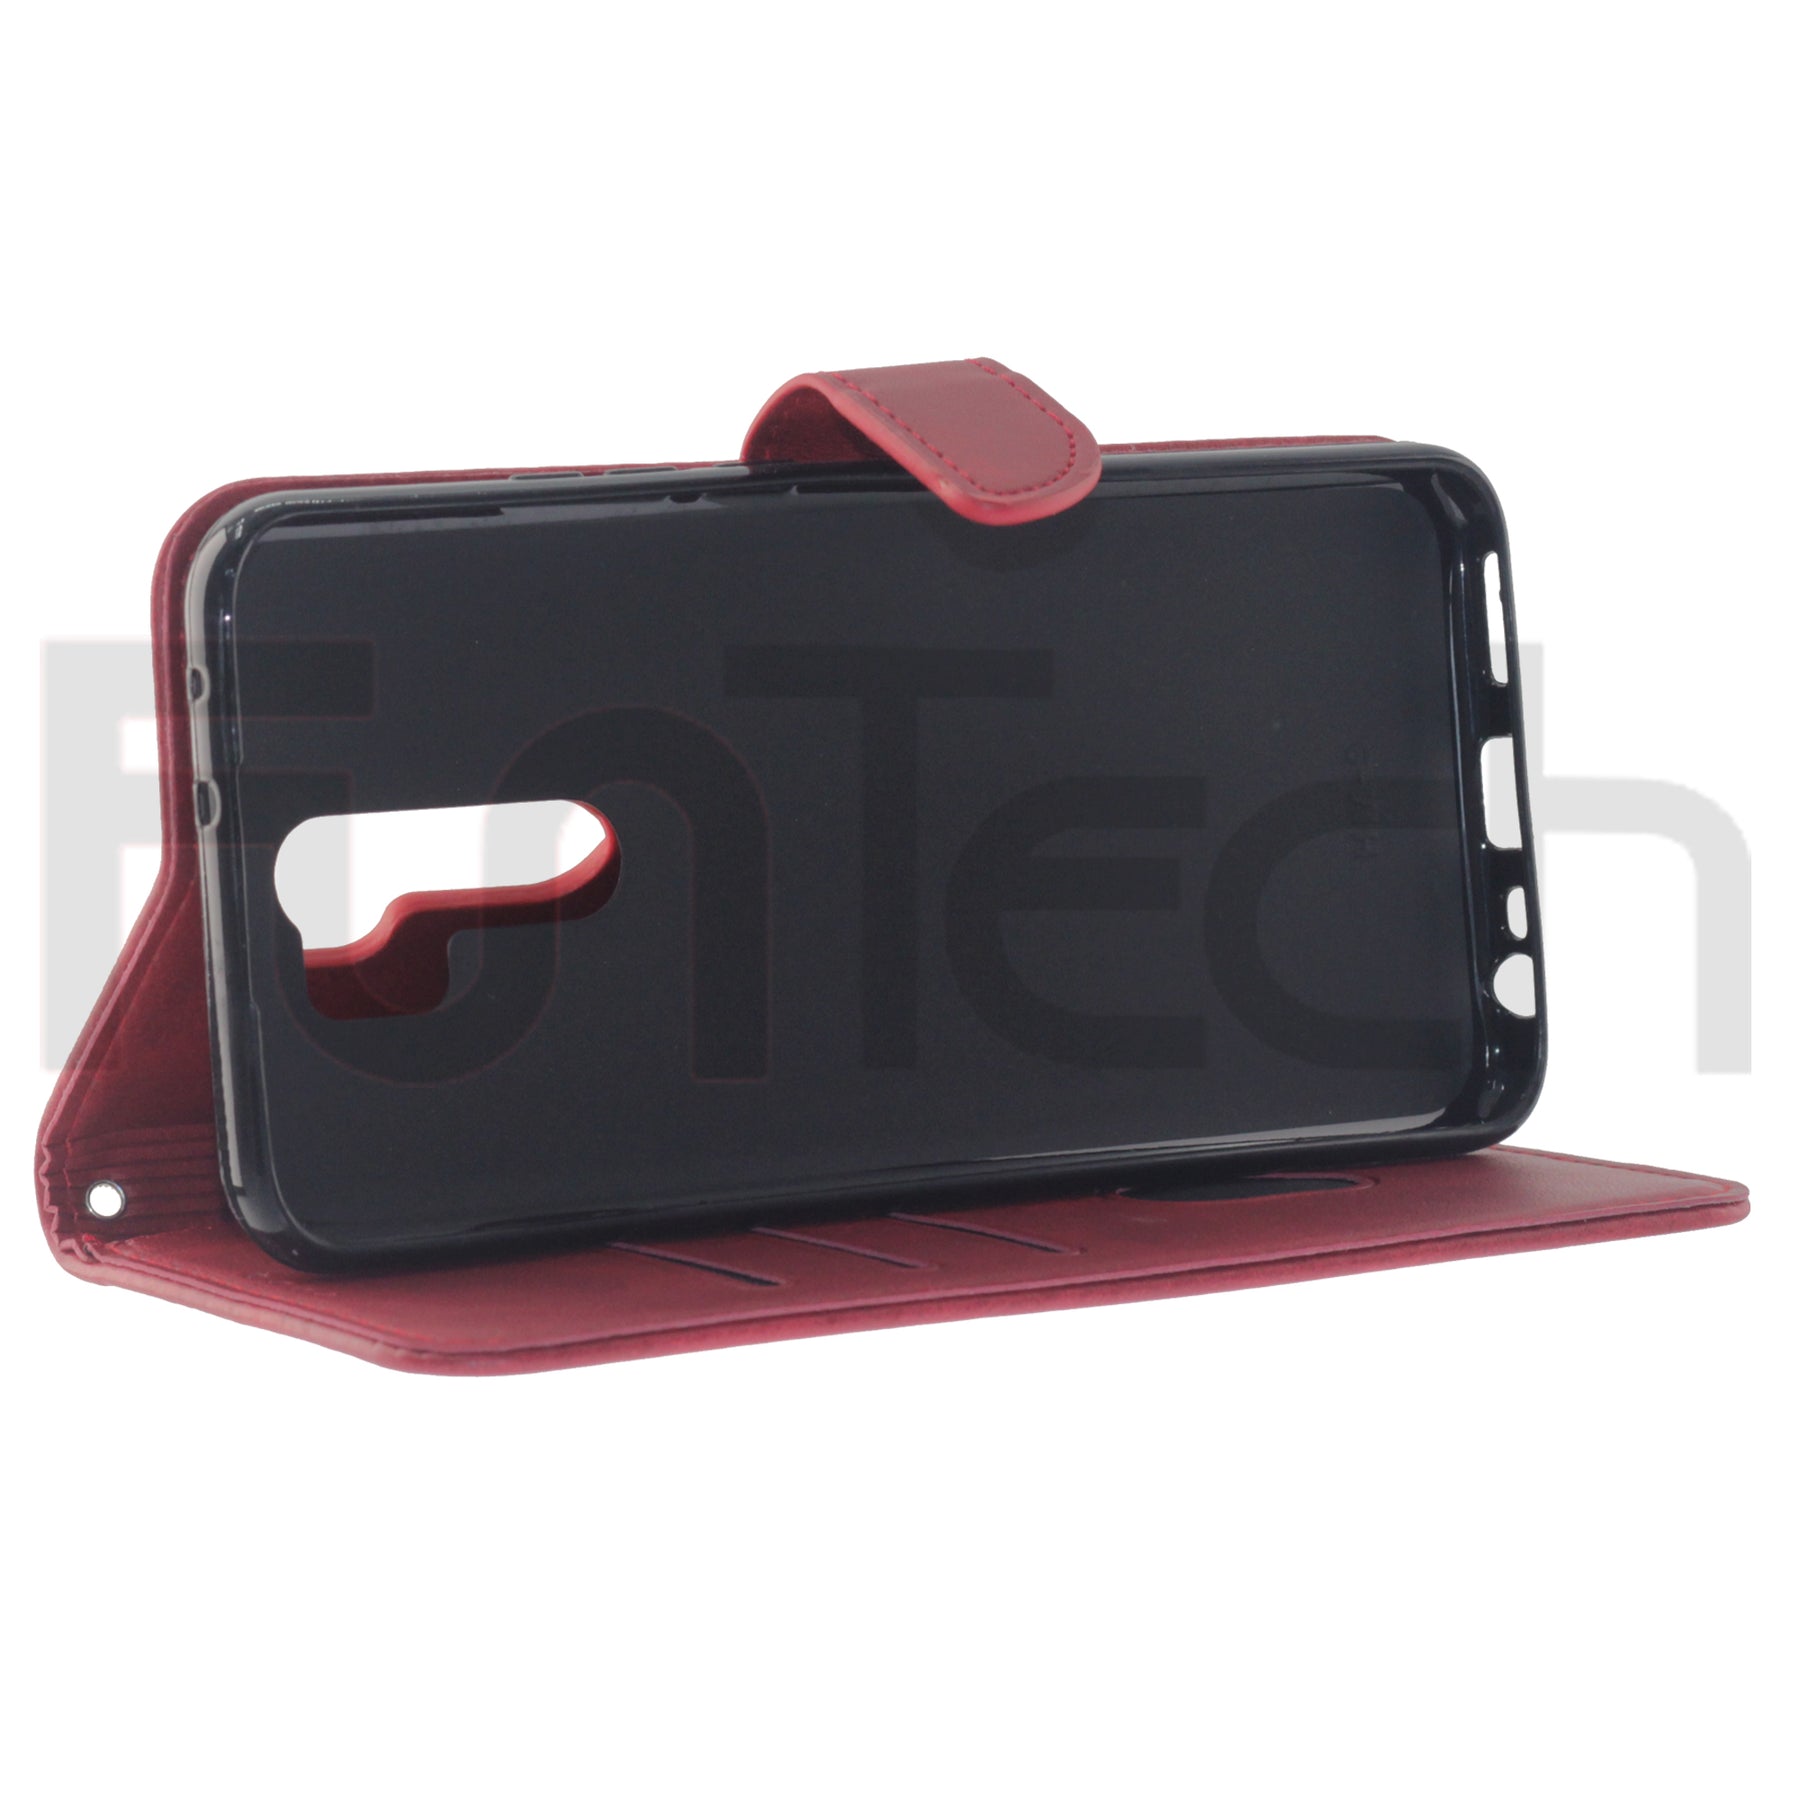 Xiaomi, Redmi 9 Lite, Leather Wallet Case, Color Red.